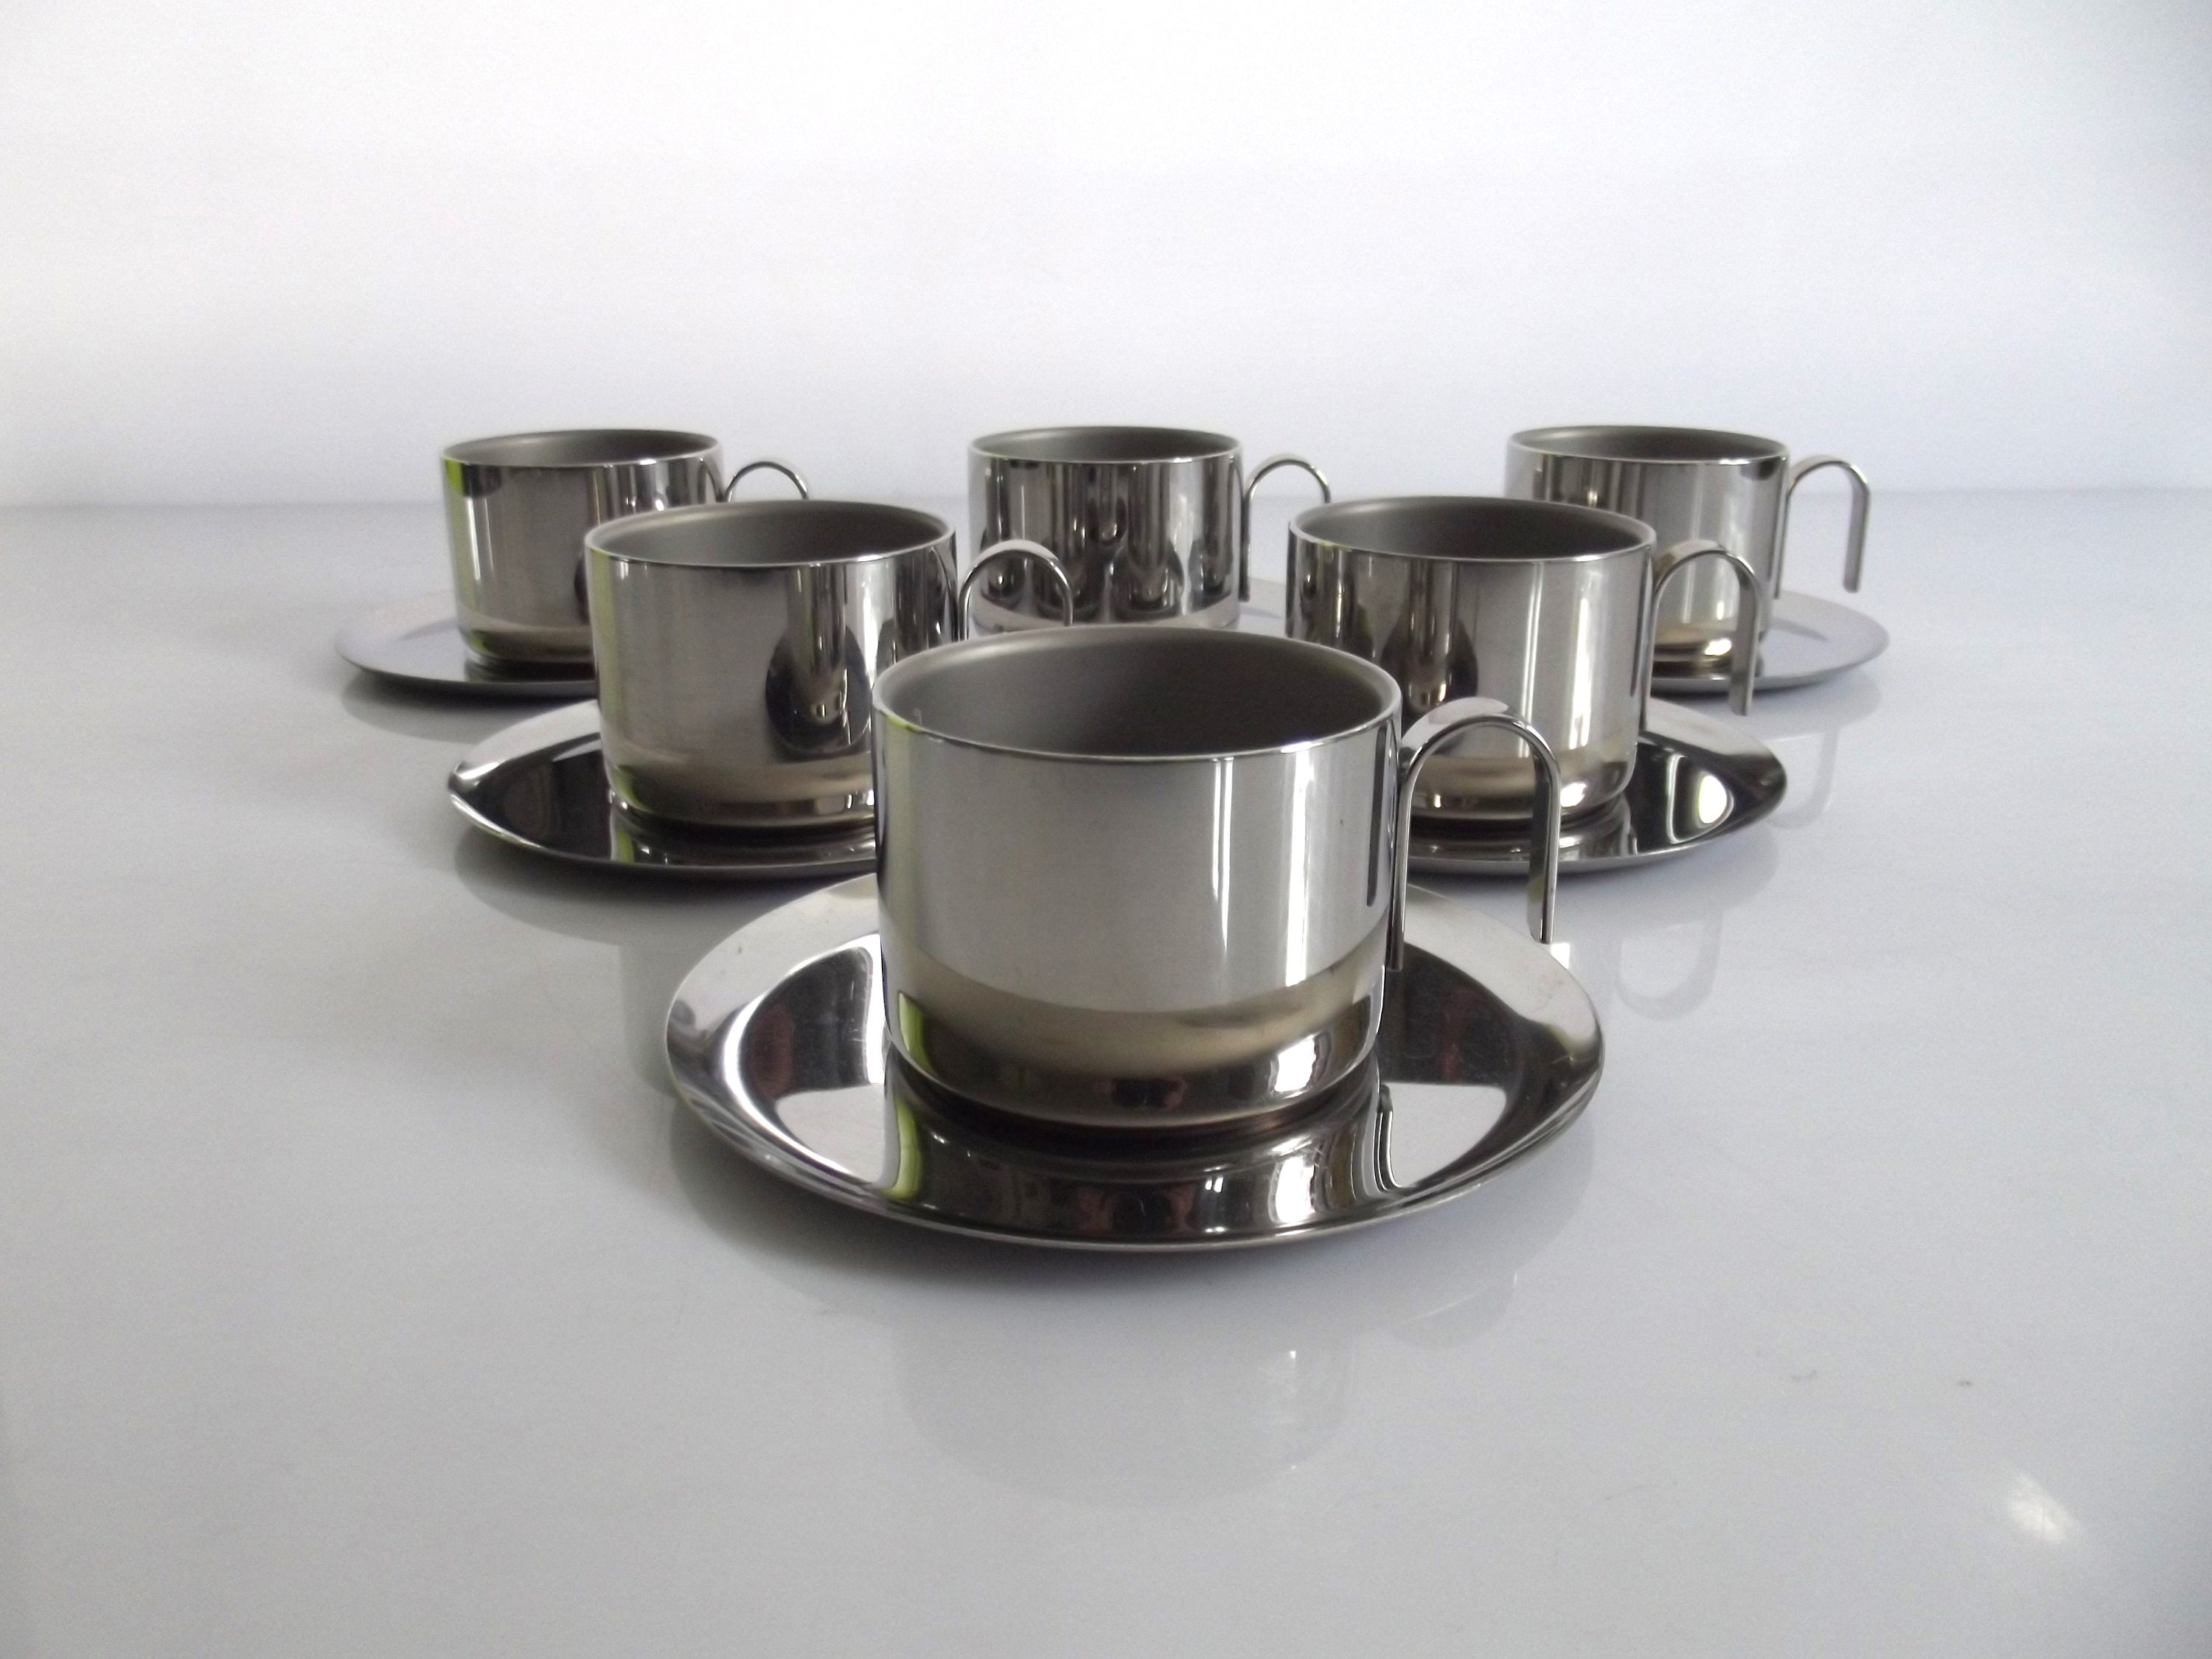 Double Walls Stainless Steel Thermal Coffee Mug Coffee Cup Inox